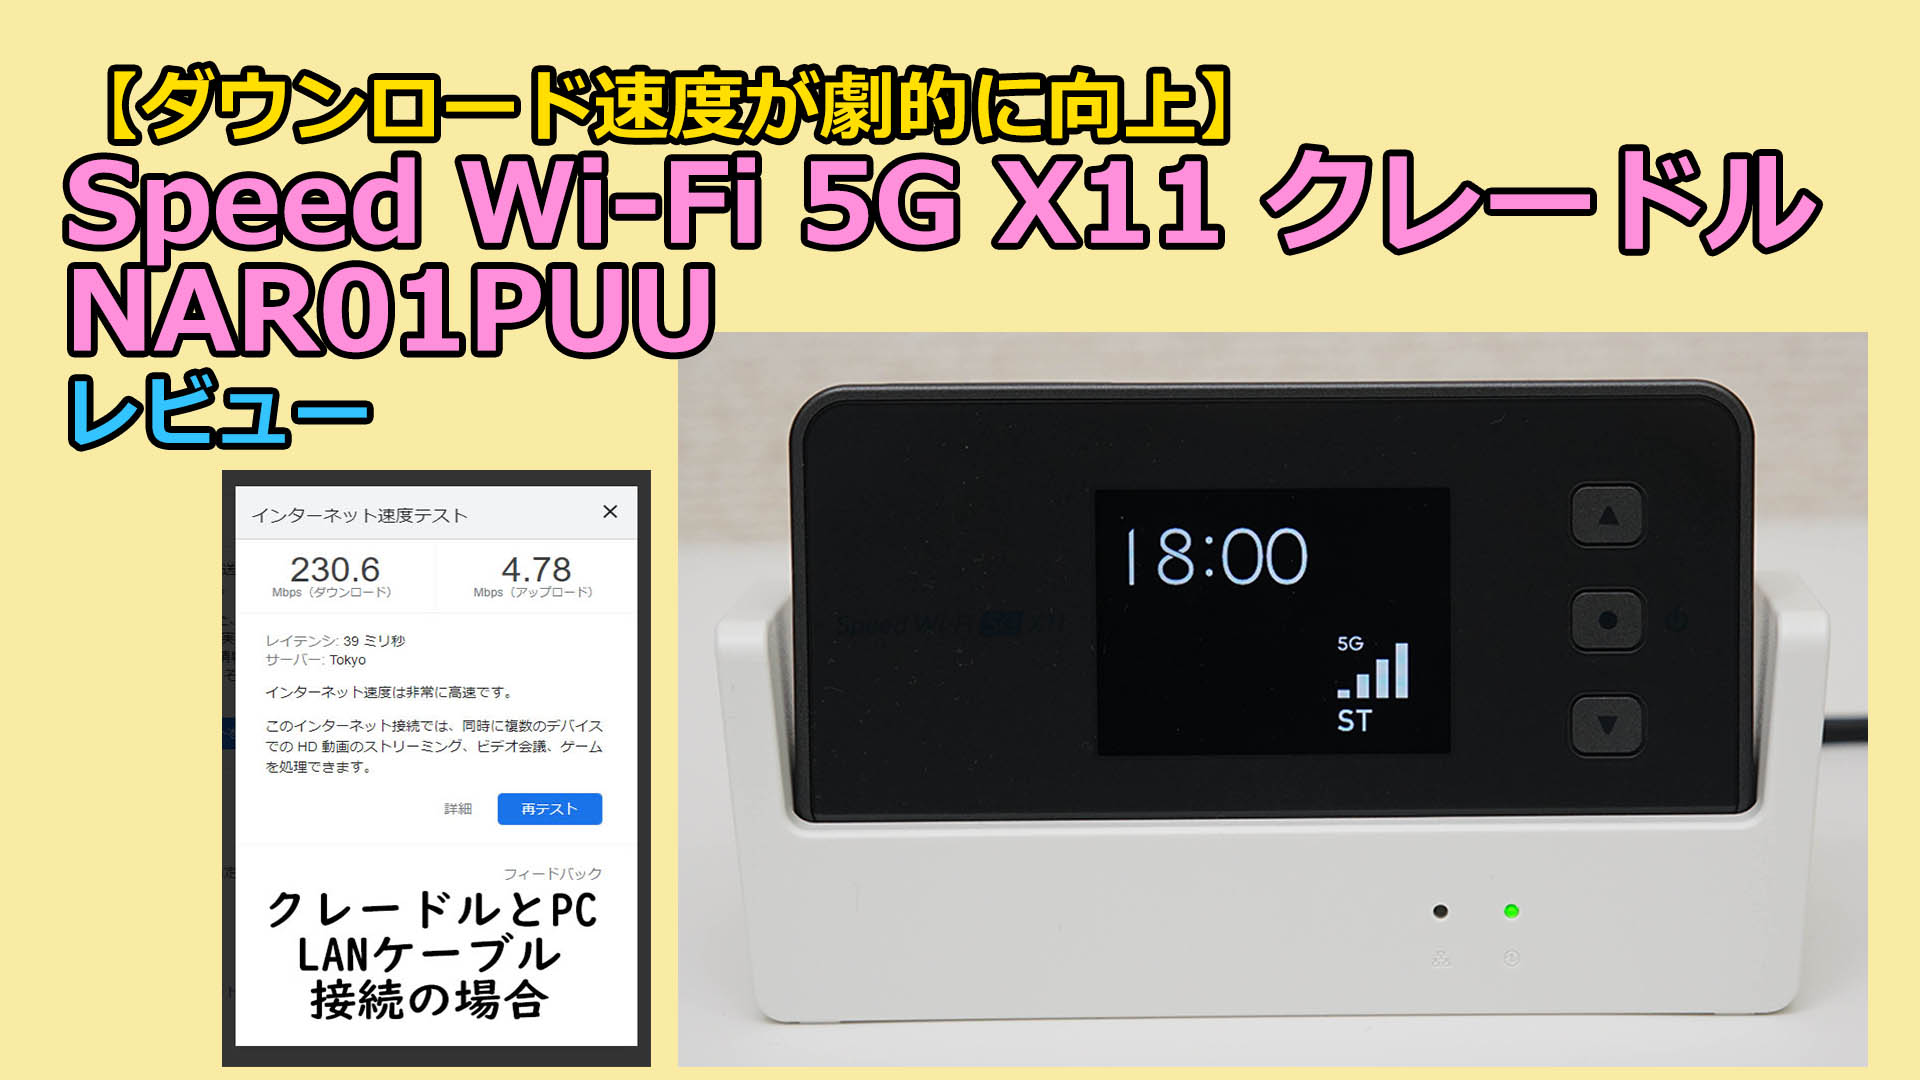 NEC Speed Wi-Fi 5G X11 クレードル付き